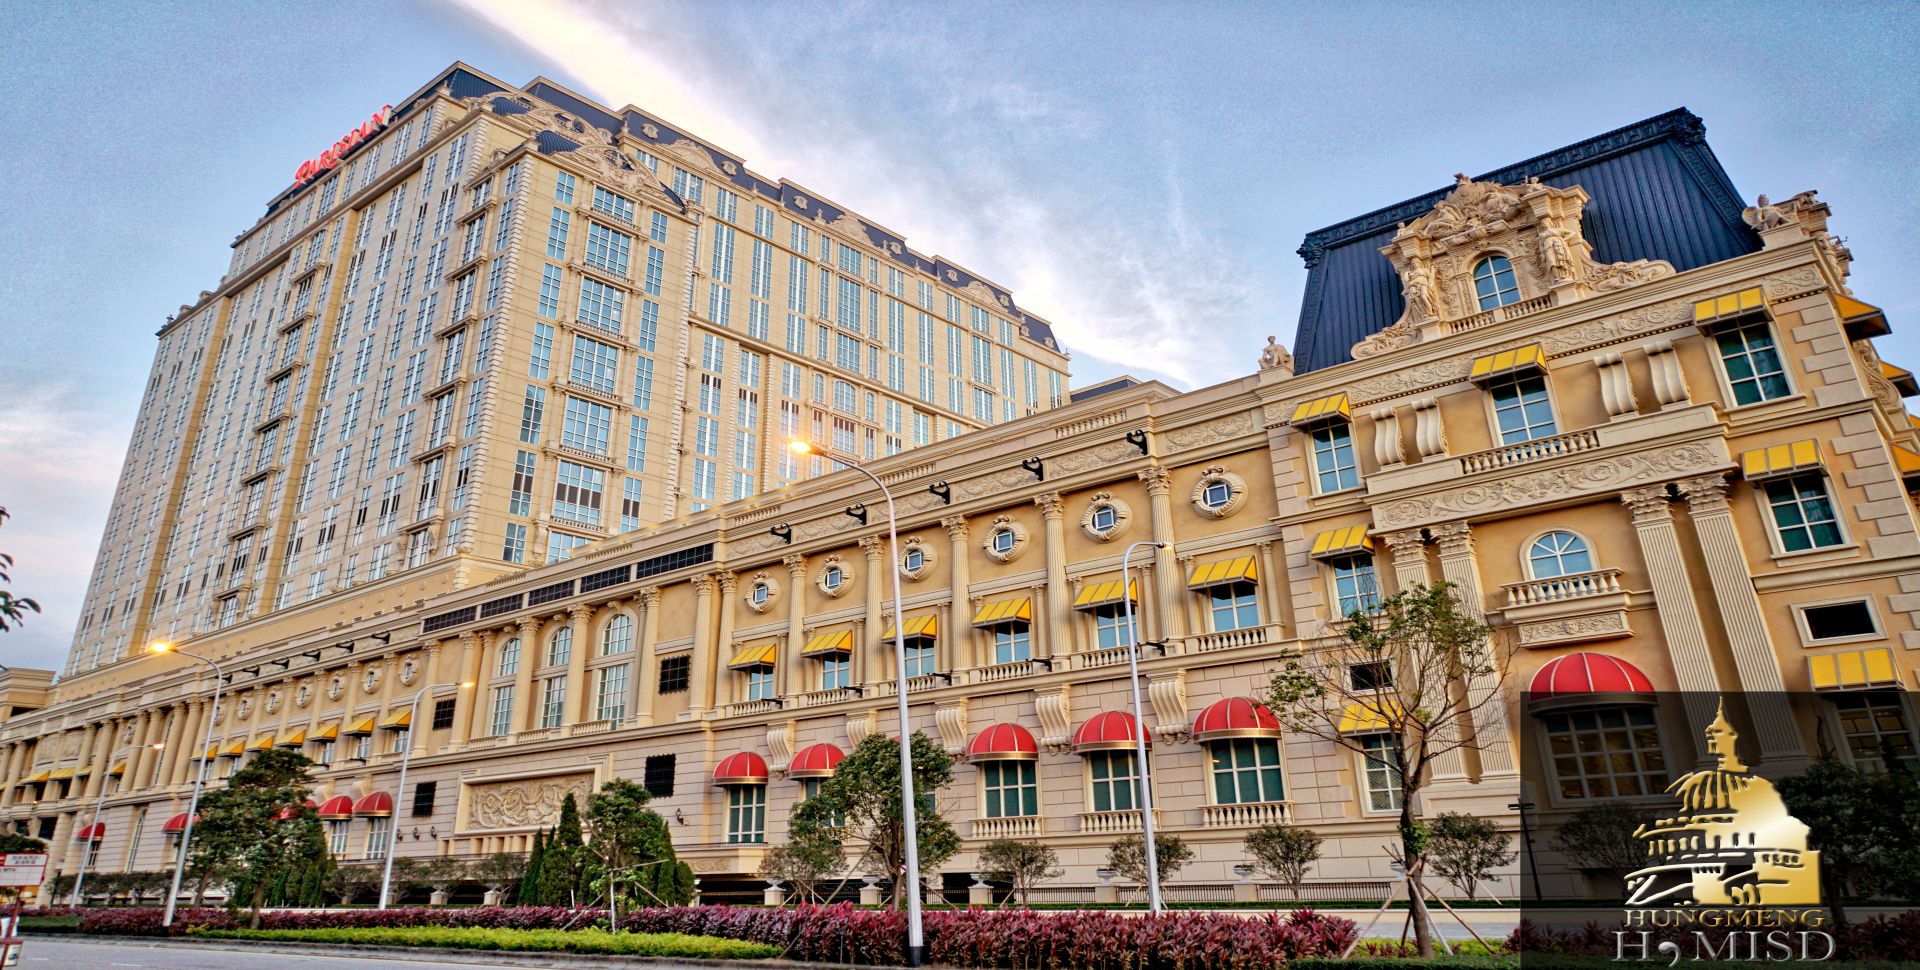 Macau Parisian Casino